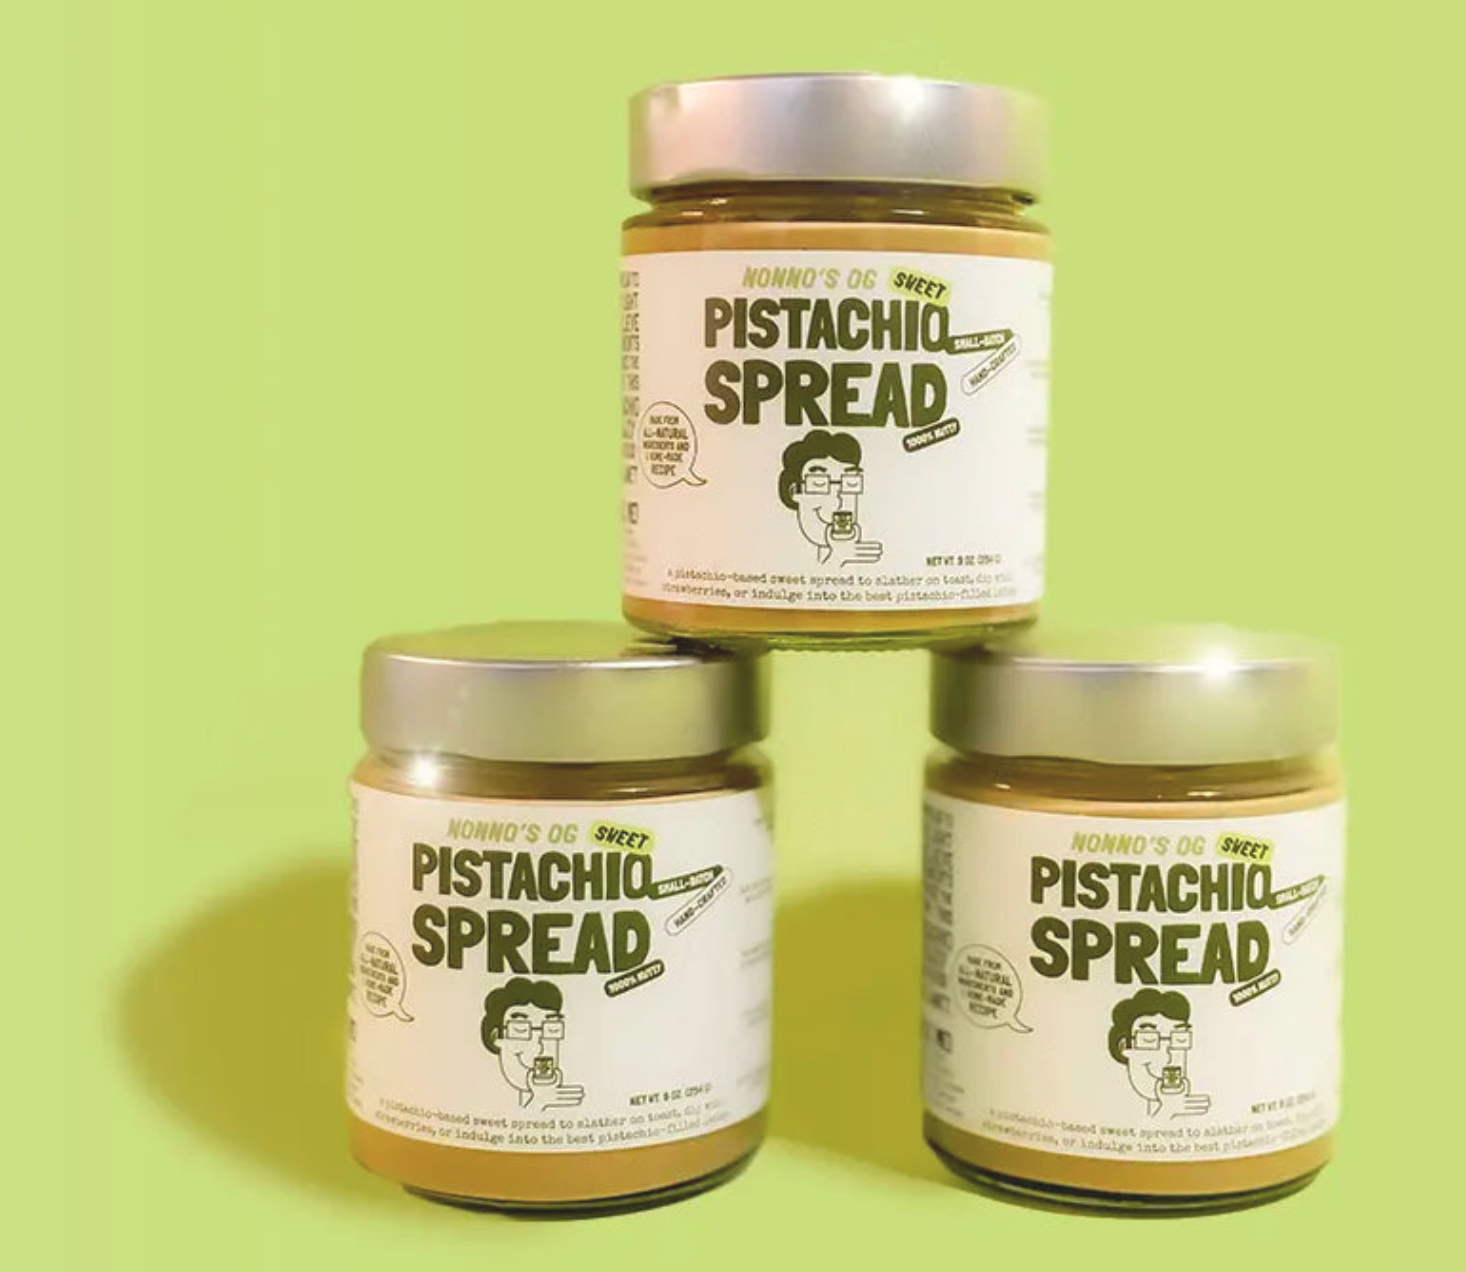 Pistachio Spread